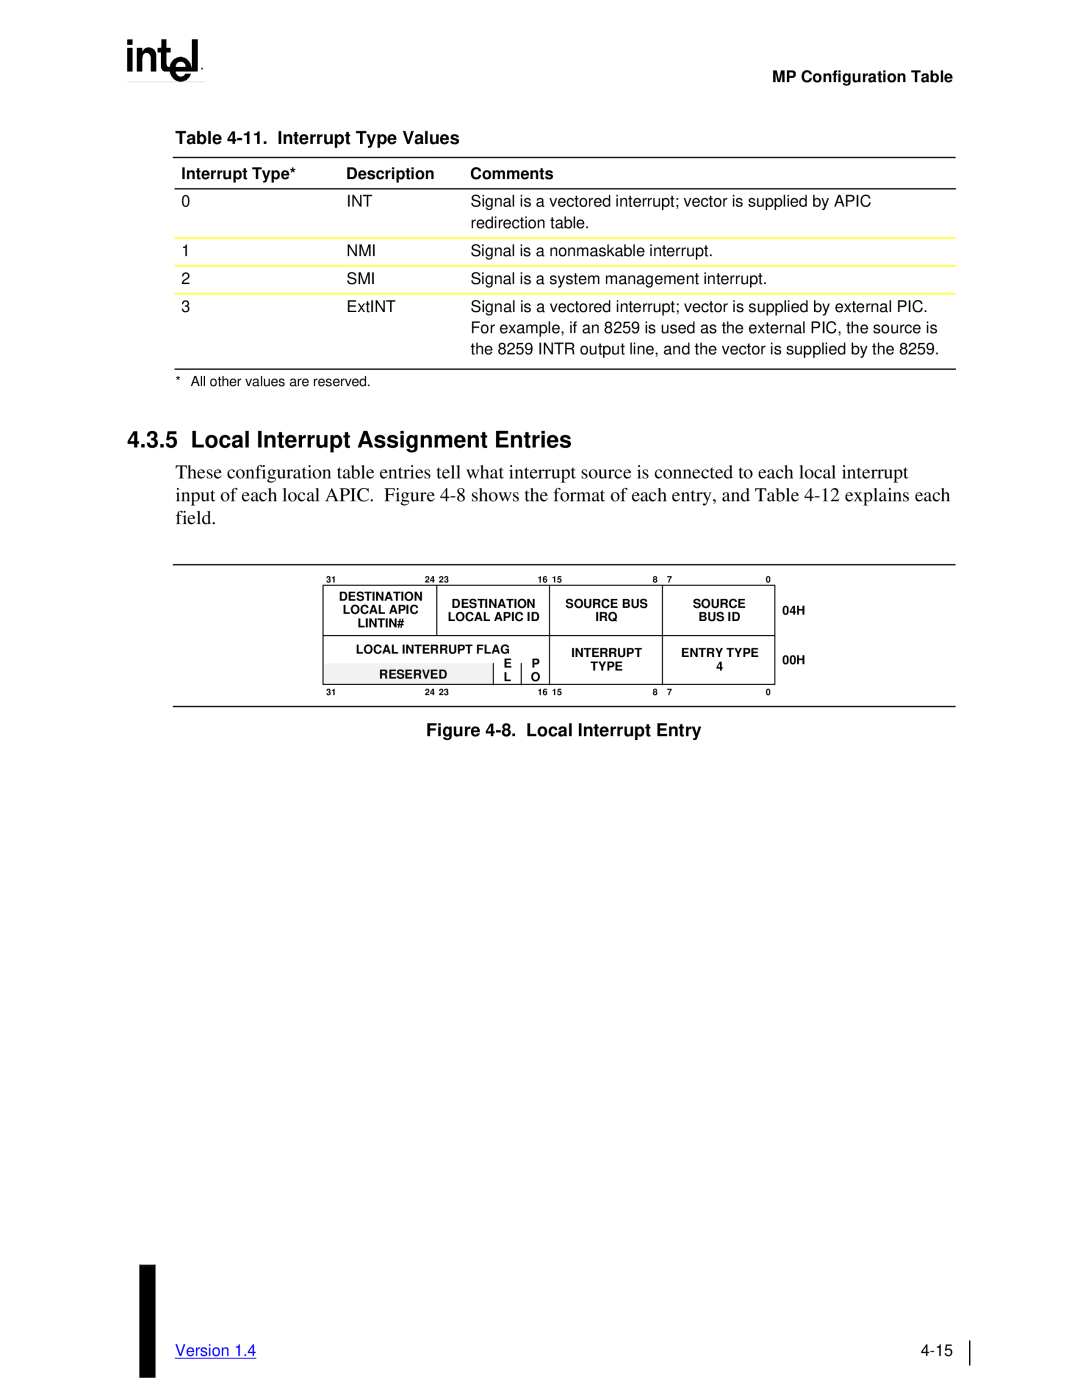 Intel MultiProcessor manual 4.3.5Local Interrupt Assignment Entries, 11.Interrupt Type Values, 8.Local Interrupt Entry 